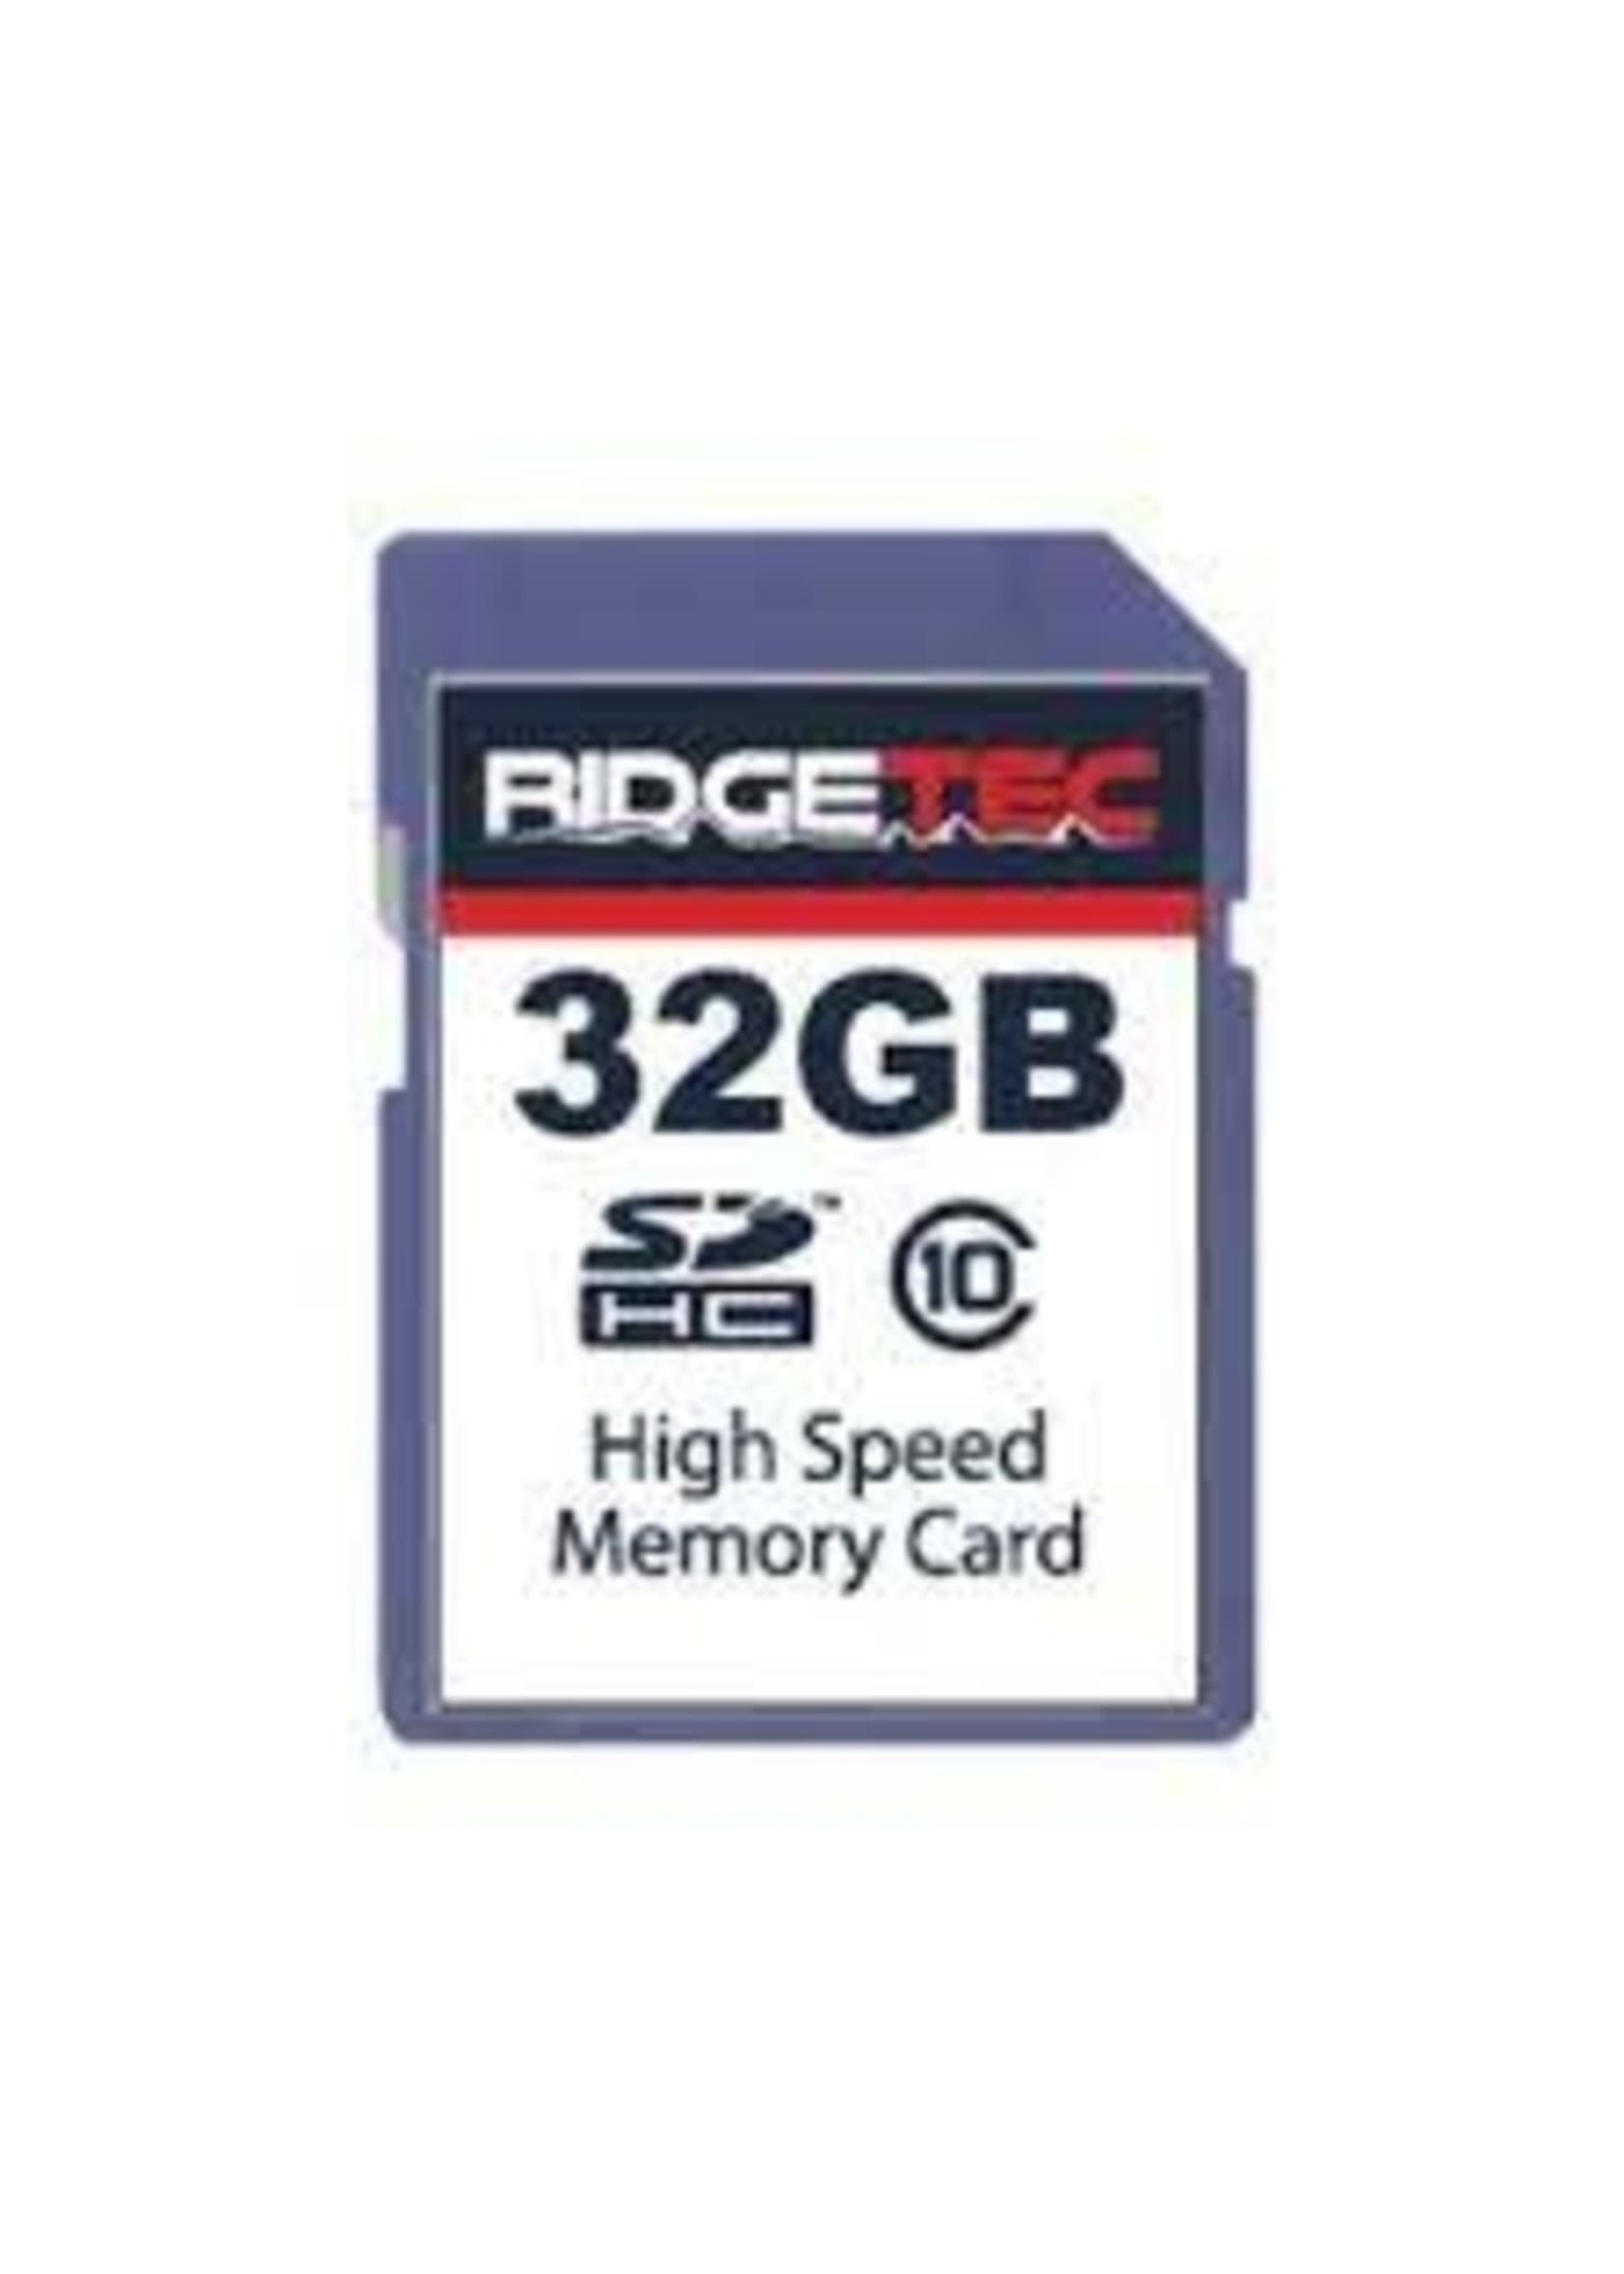 RIDGETEC INC RIDGETEC HIGH SPEED MEMORY CARD 32GB